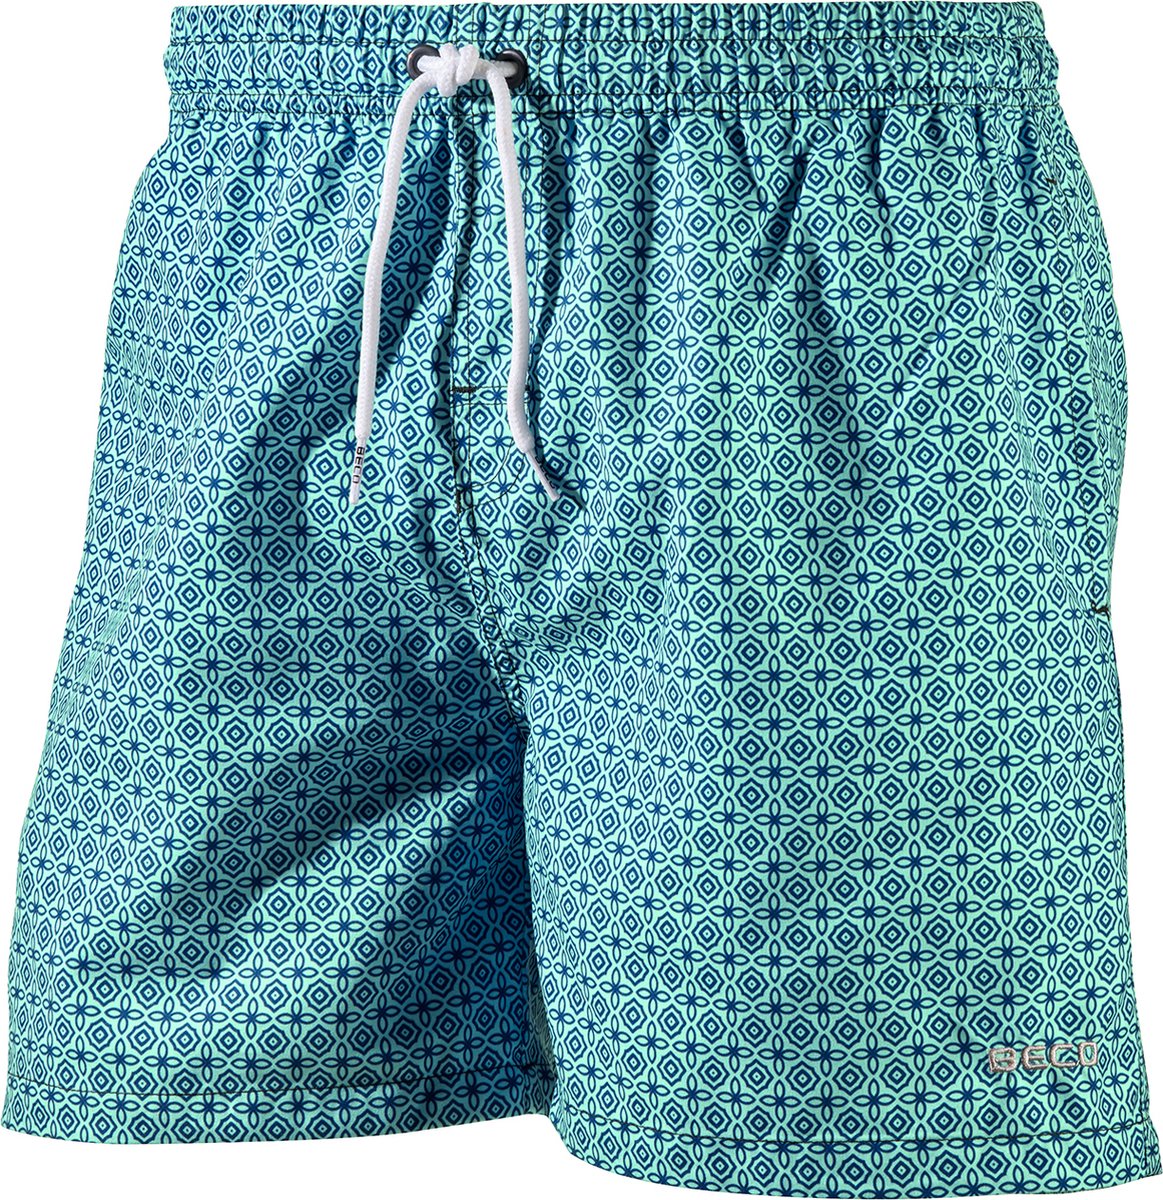 BECO shorts, binnenbroekje, elastische band, lengte 42 cm, 3 zakjes, mint groen, maat 2XL